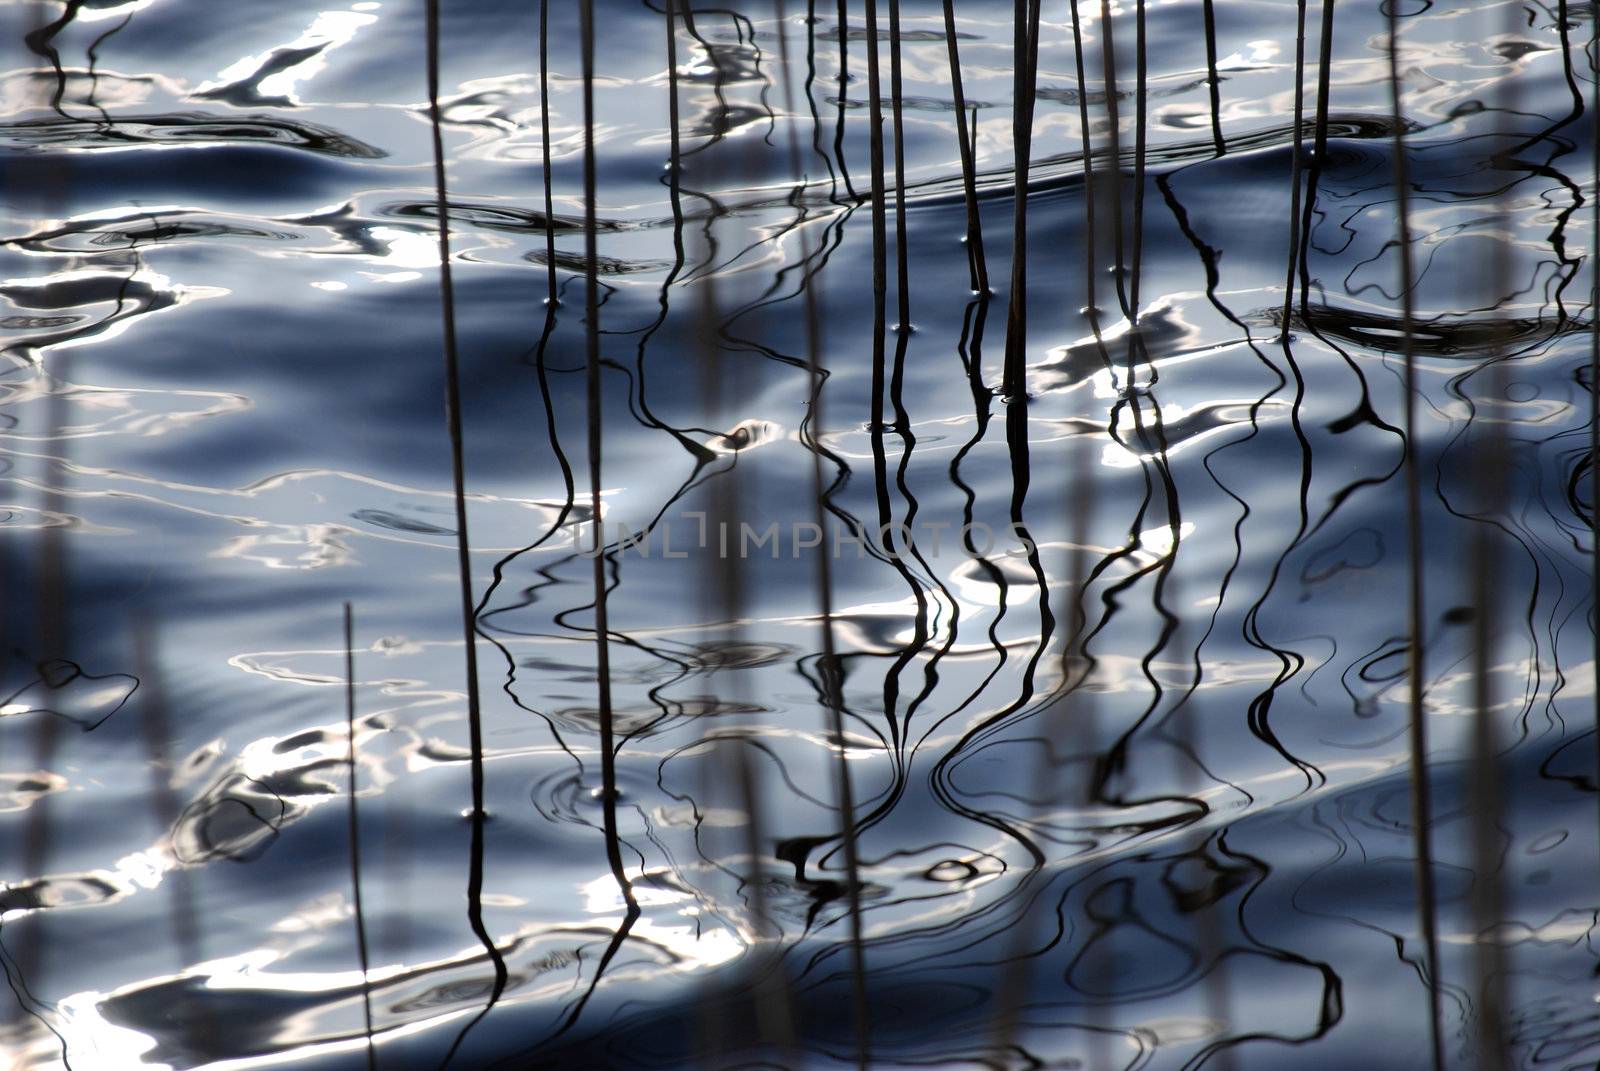 Water impressions by Jule_Berlin